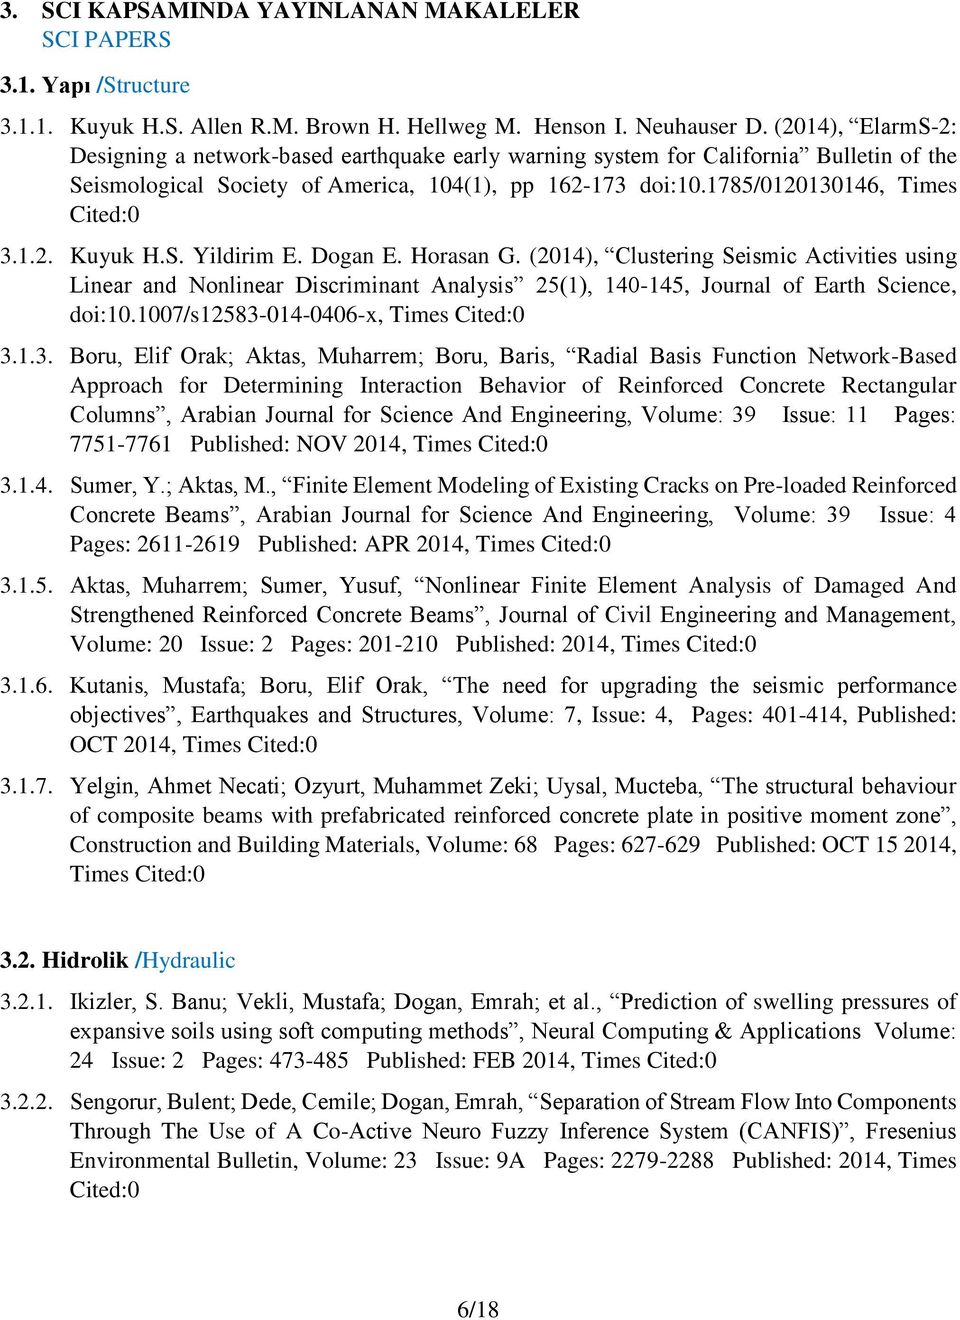 1.2. Kuyuk H.S. Yildirim E. Dogan E. Horasan G. (2014), Clustering Seismic Activities using Linear and Nonlinear Discriminant Analysis 25(1), 140-145, Journal of Earth Science, doi:10.